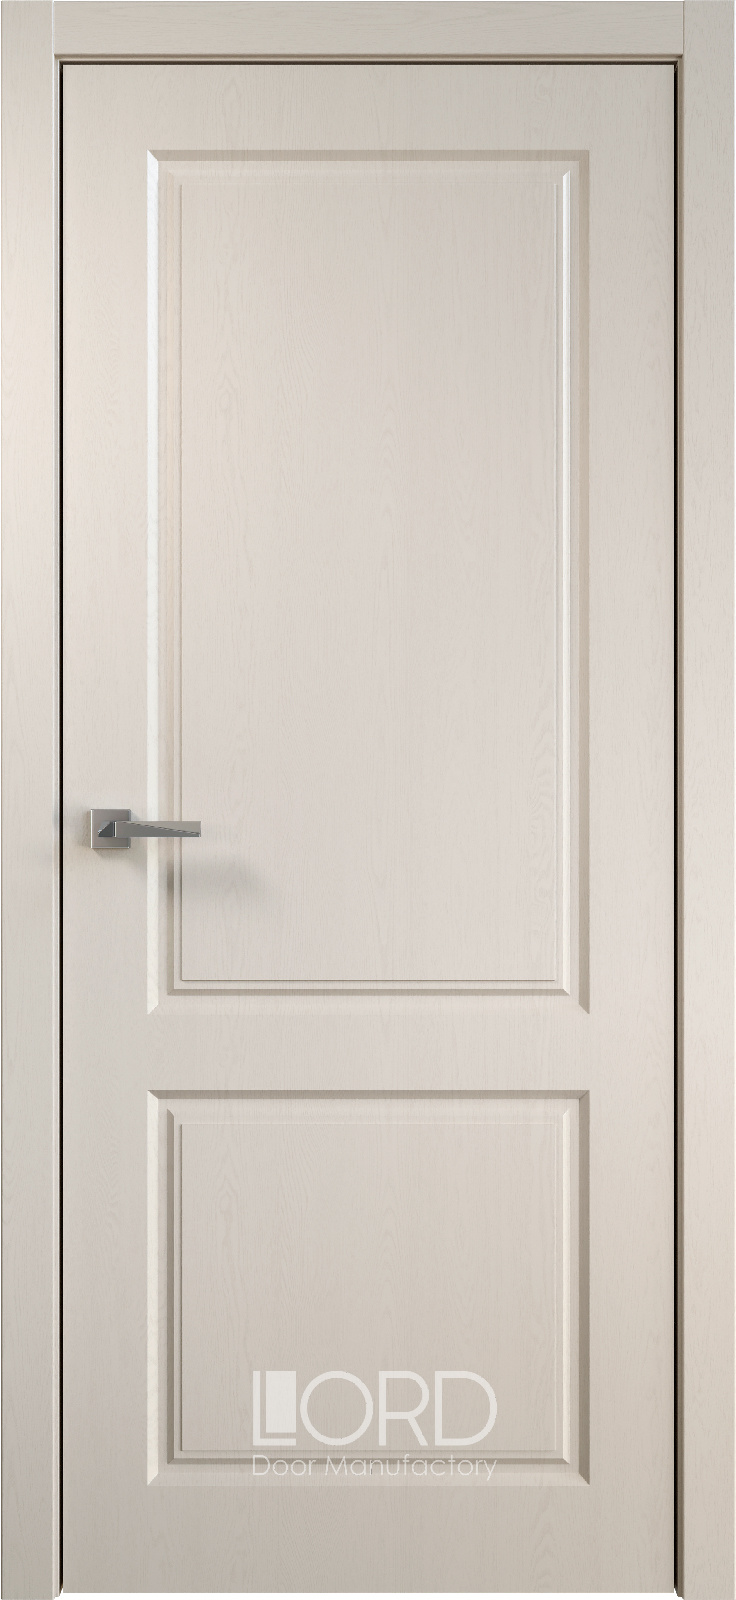 Лорд Межкомнатная дверь K 1 ДГ, арт. 22811 - фото №1